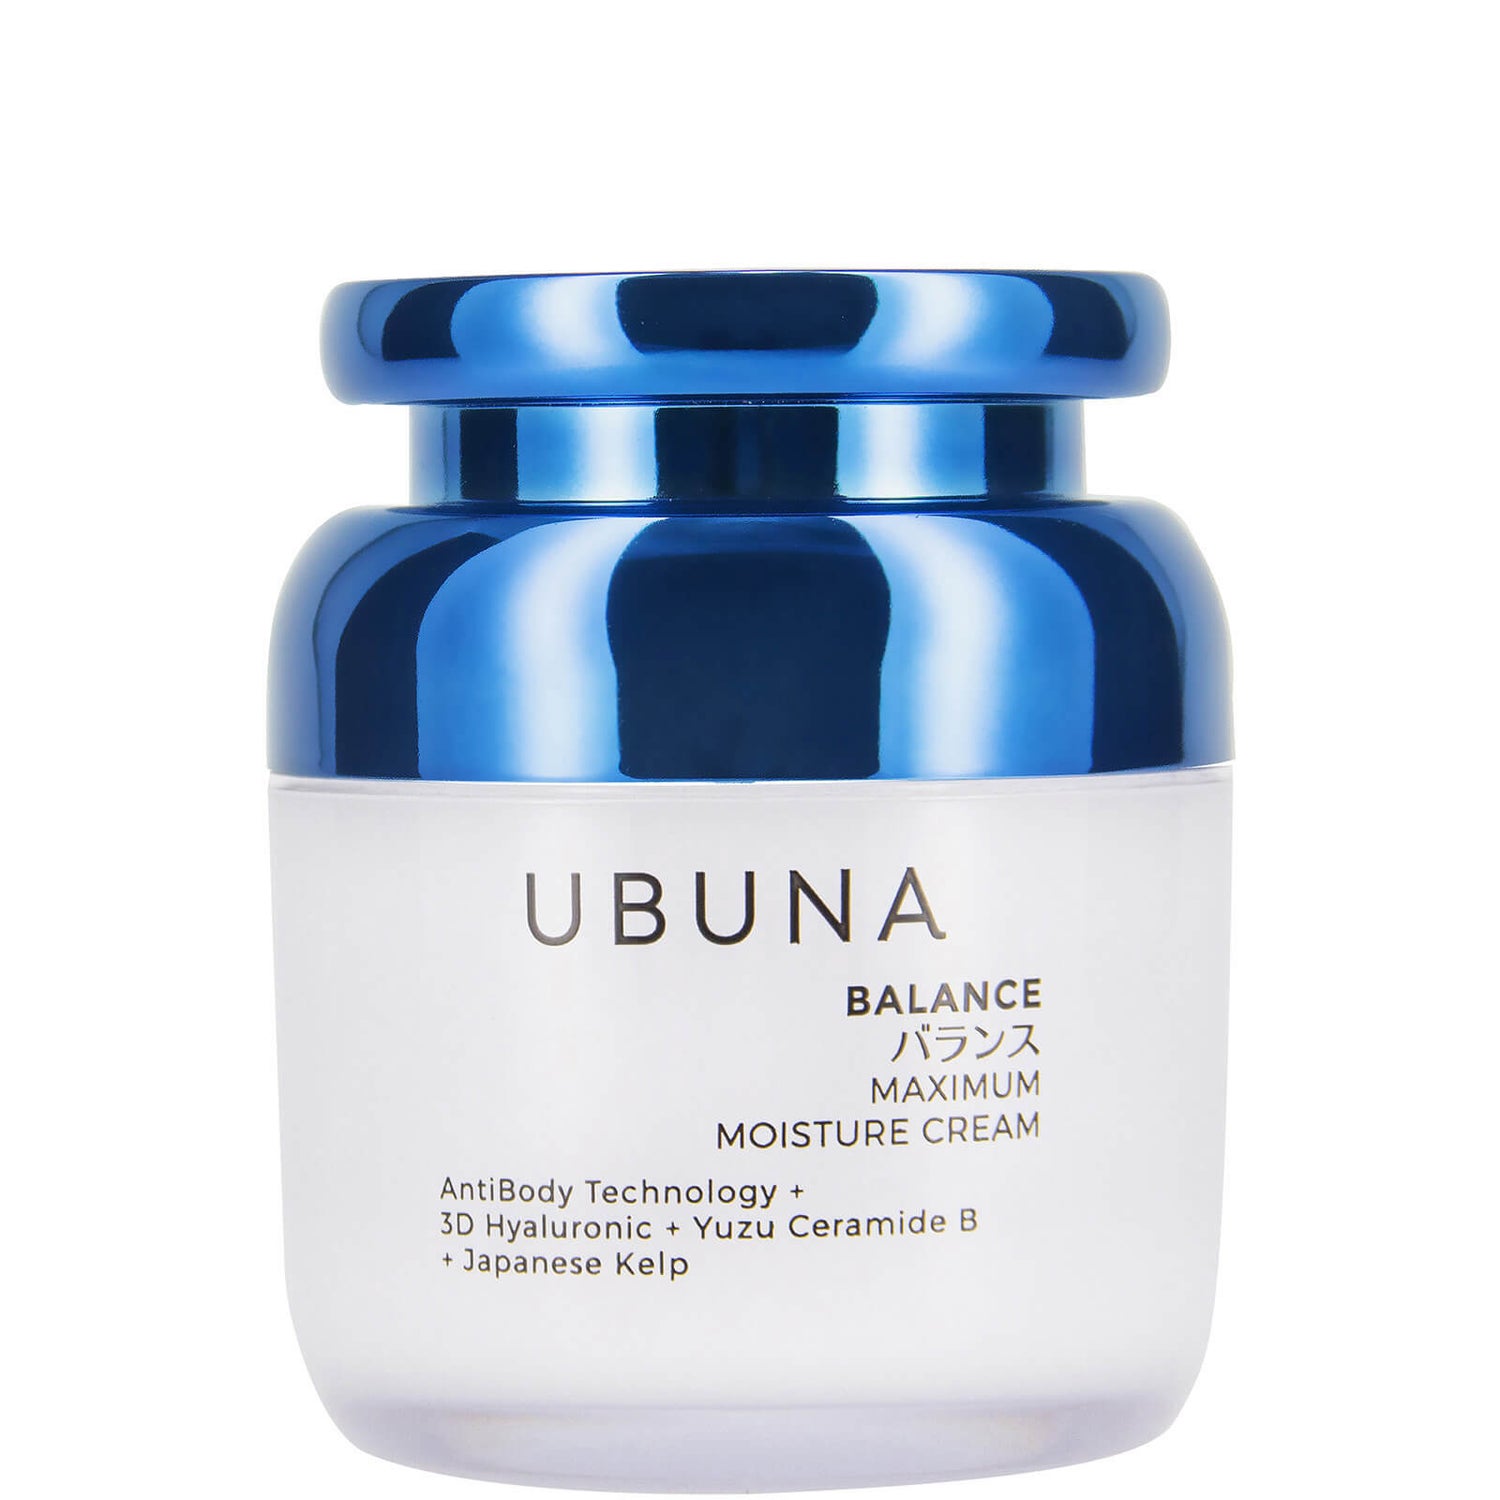 UBUNA Balance Maximum Moisture Cream